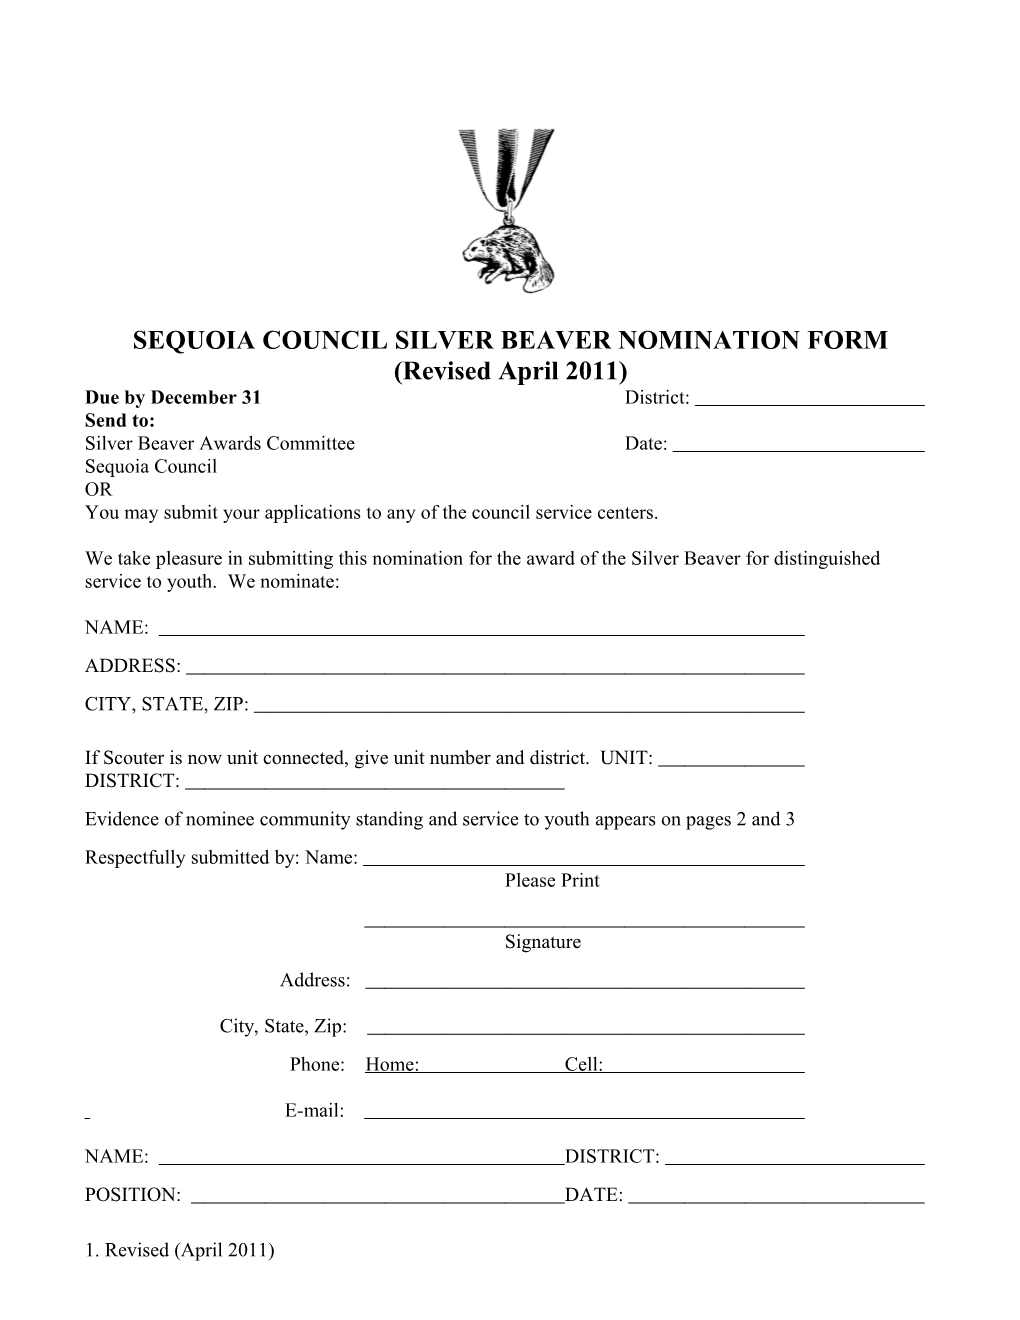 Sequoia Council Silver Beaver Nomination Form